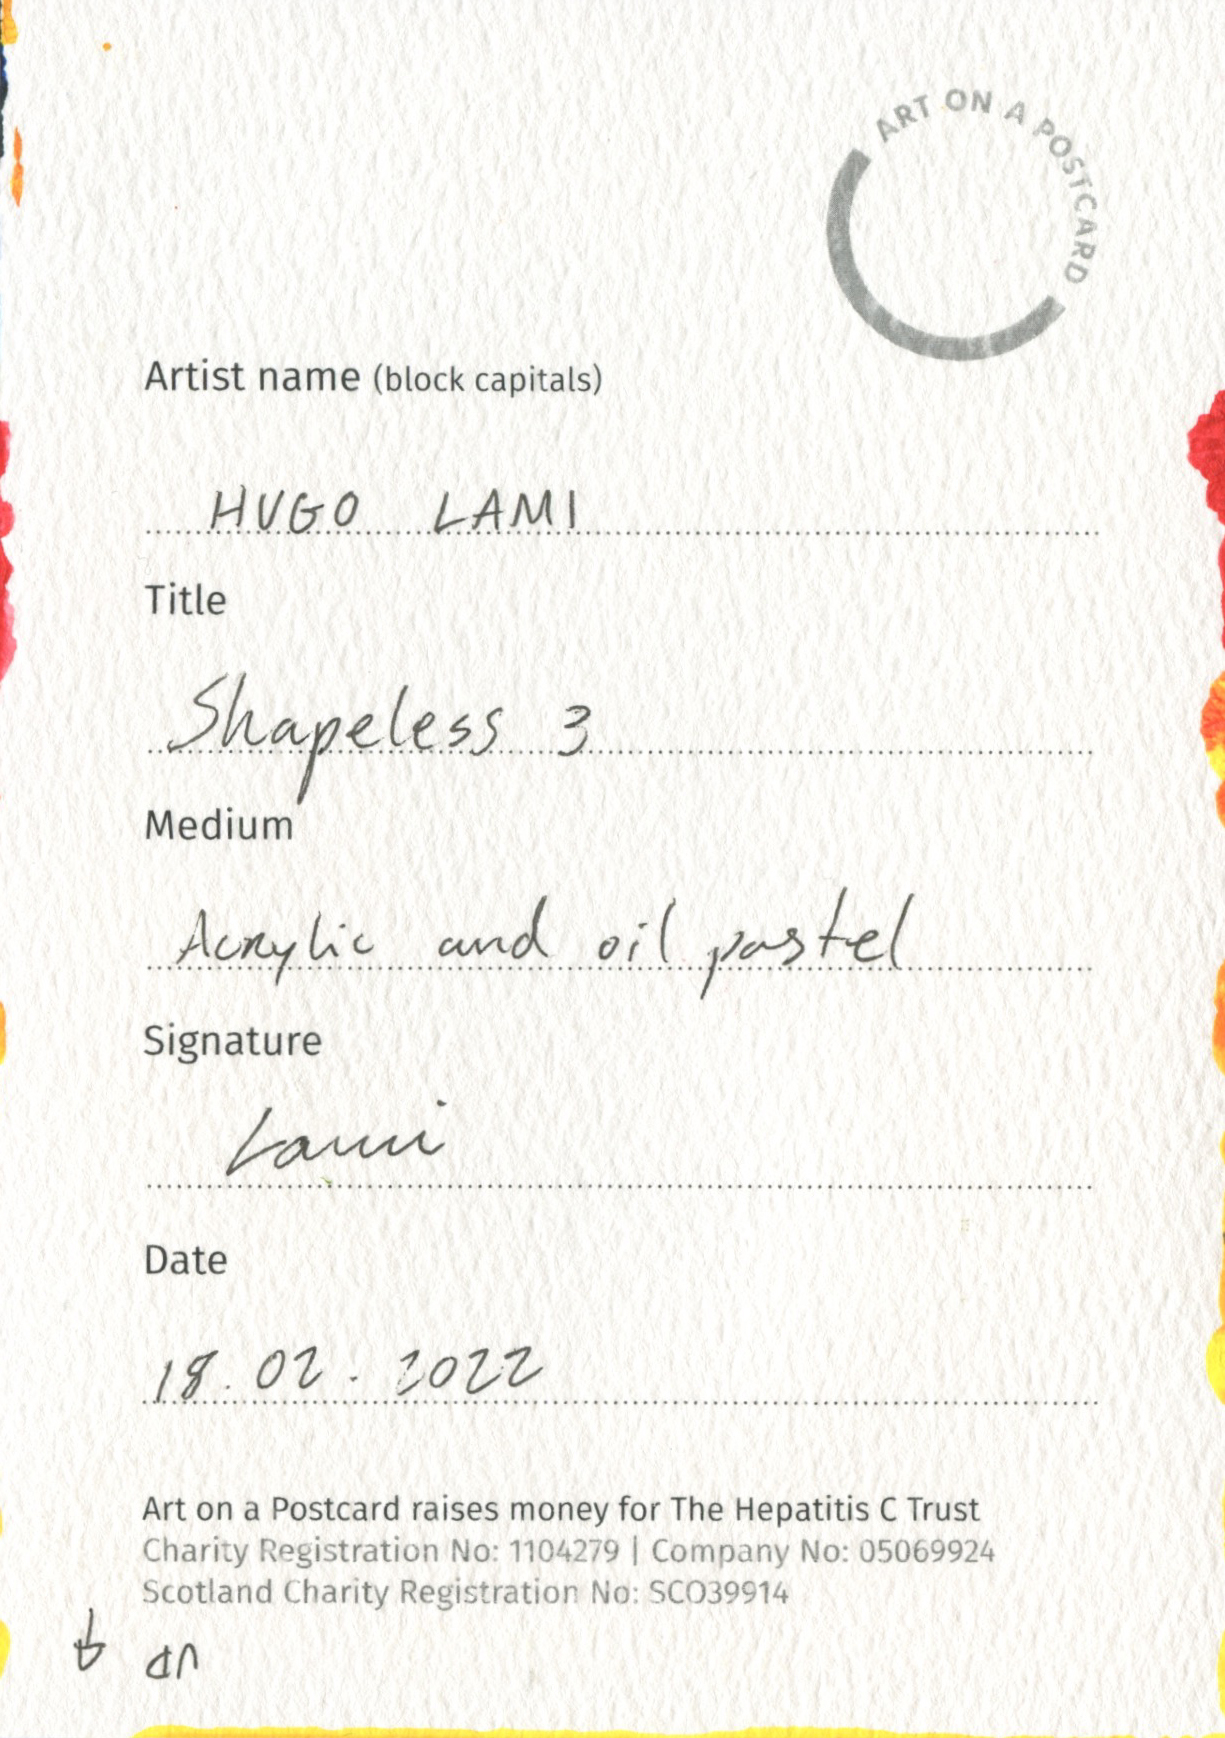 91. Hugo Lami - Shapeless 3 - BACK